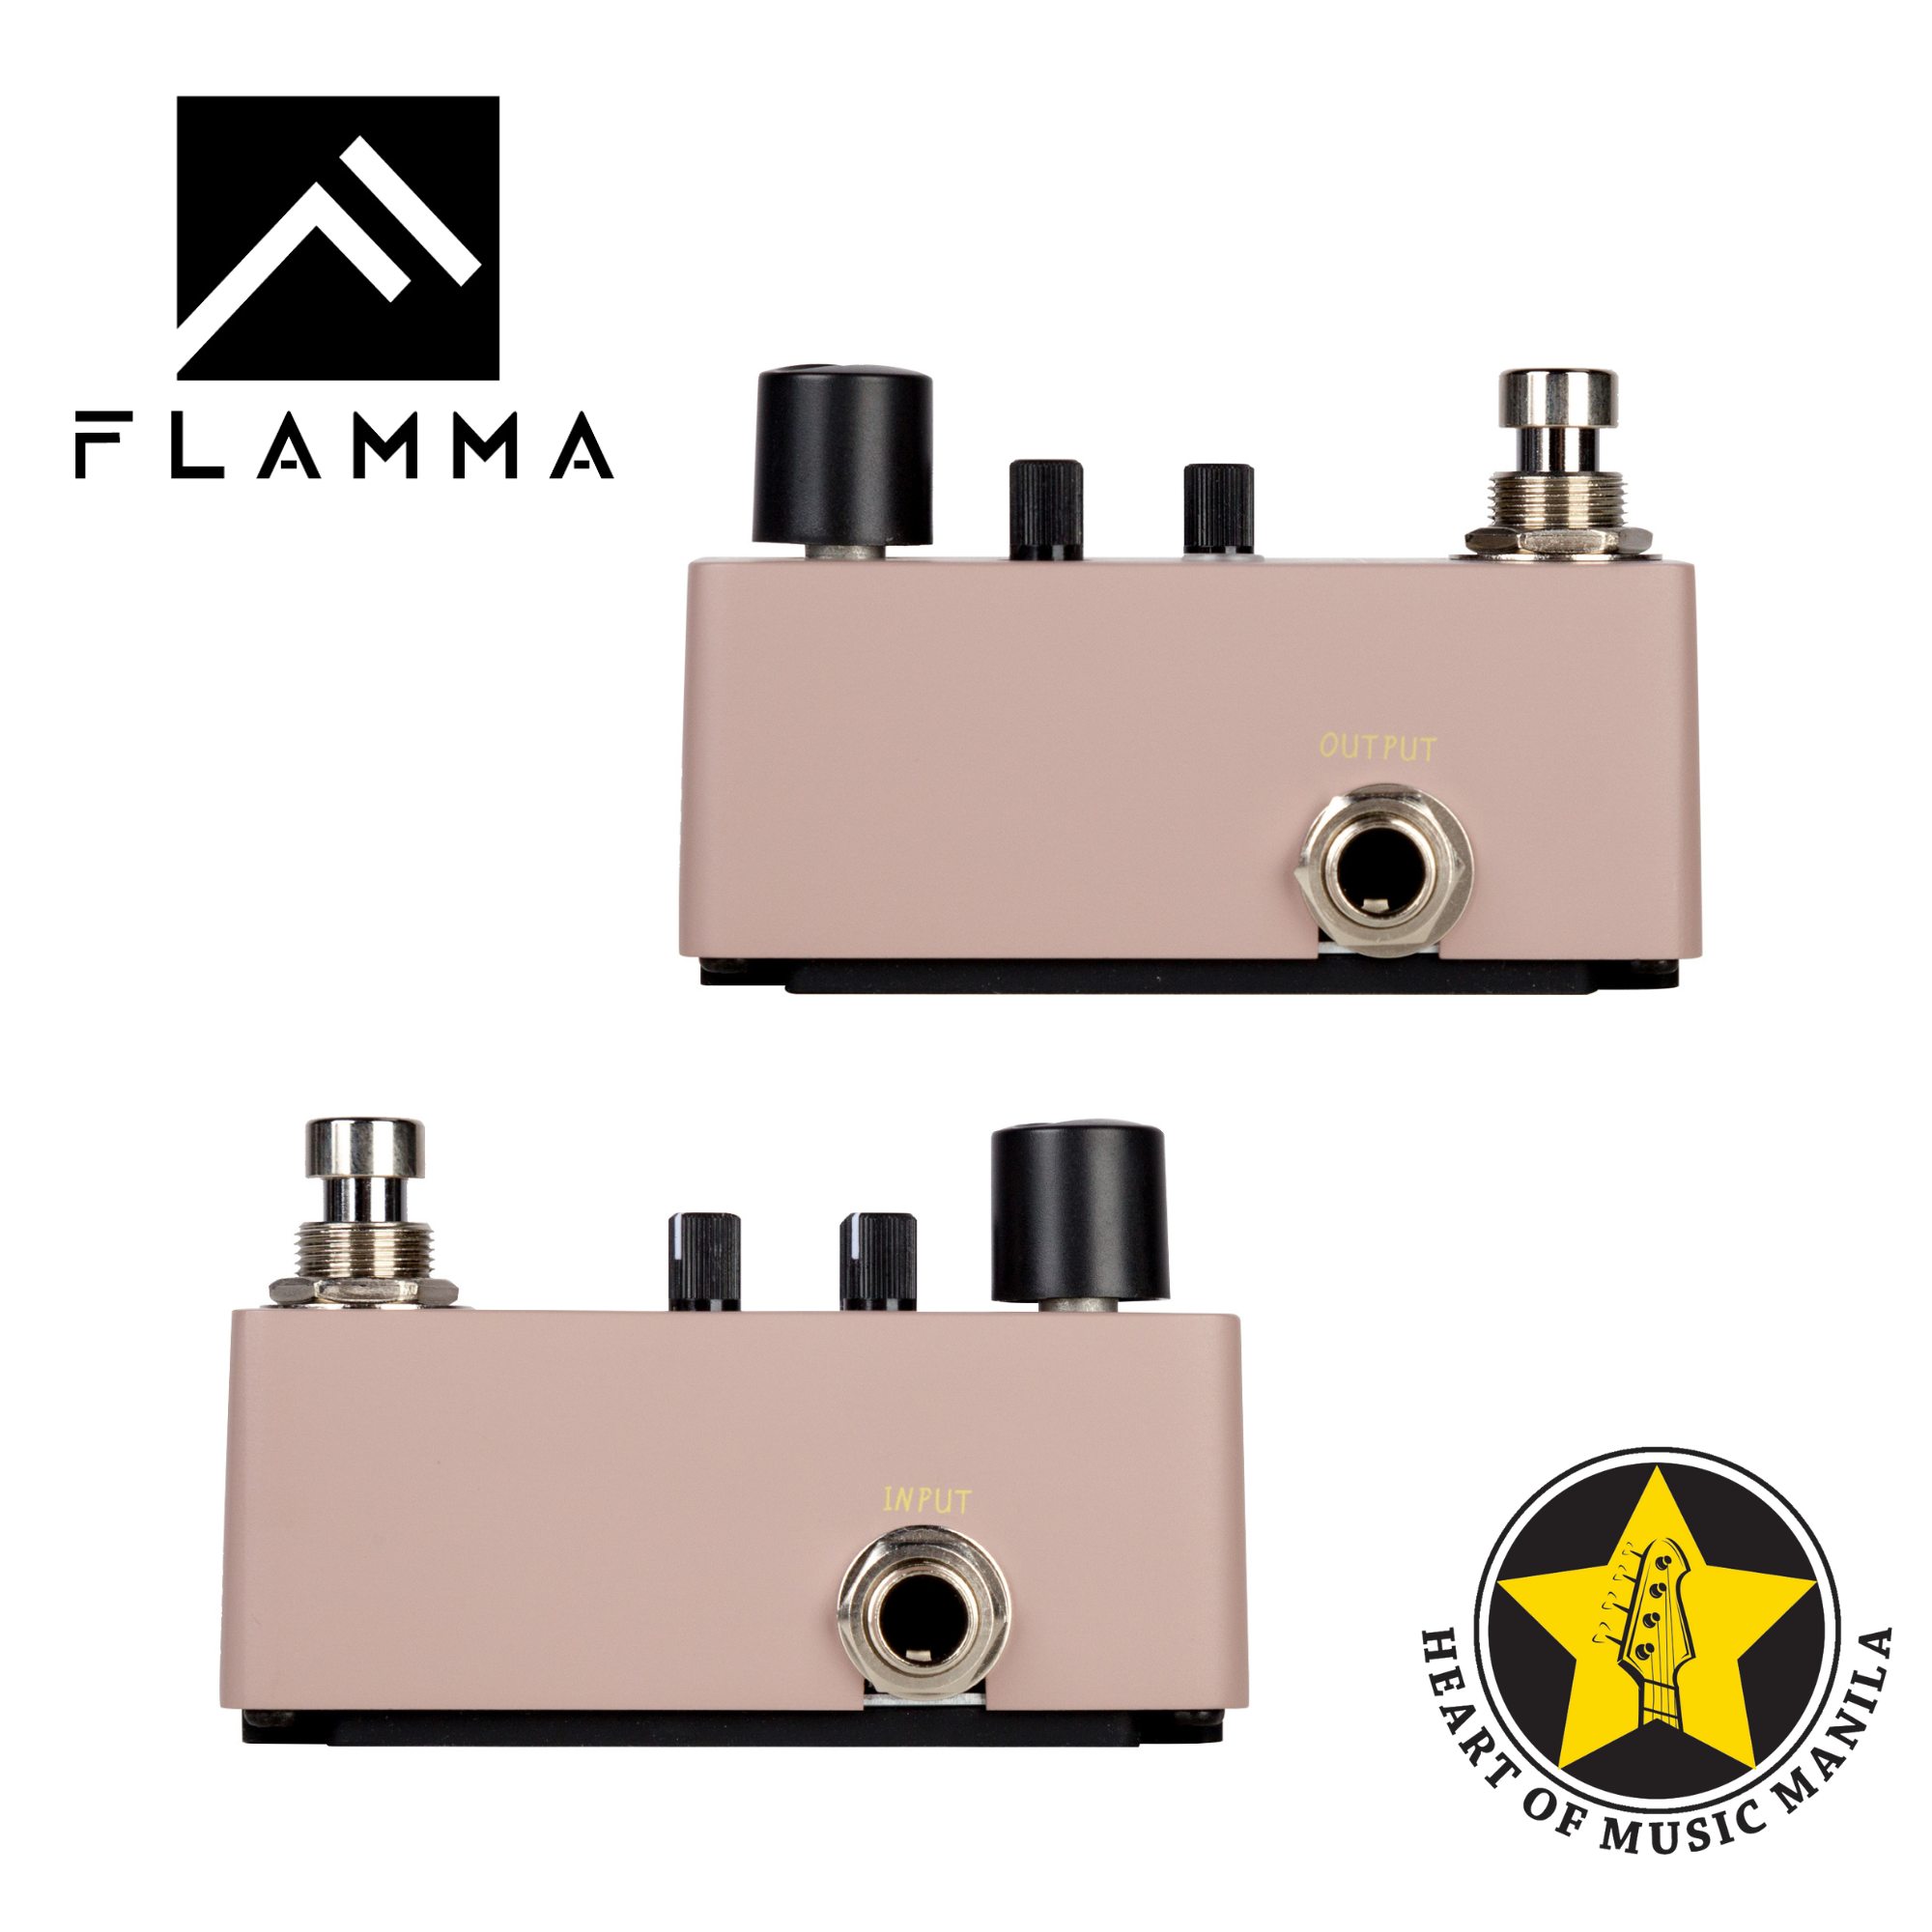 FLAMMA FC18 Clean Boost Pedal, 20db+ Clean Boost with a 2 Band EQ – Flamma  Innovation